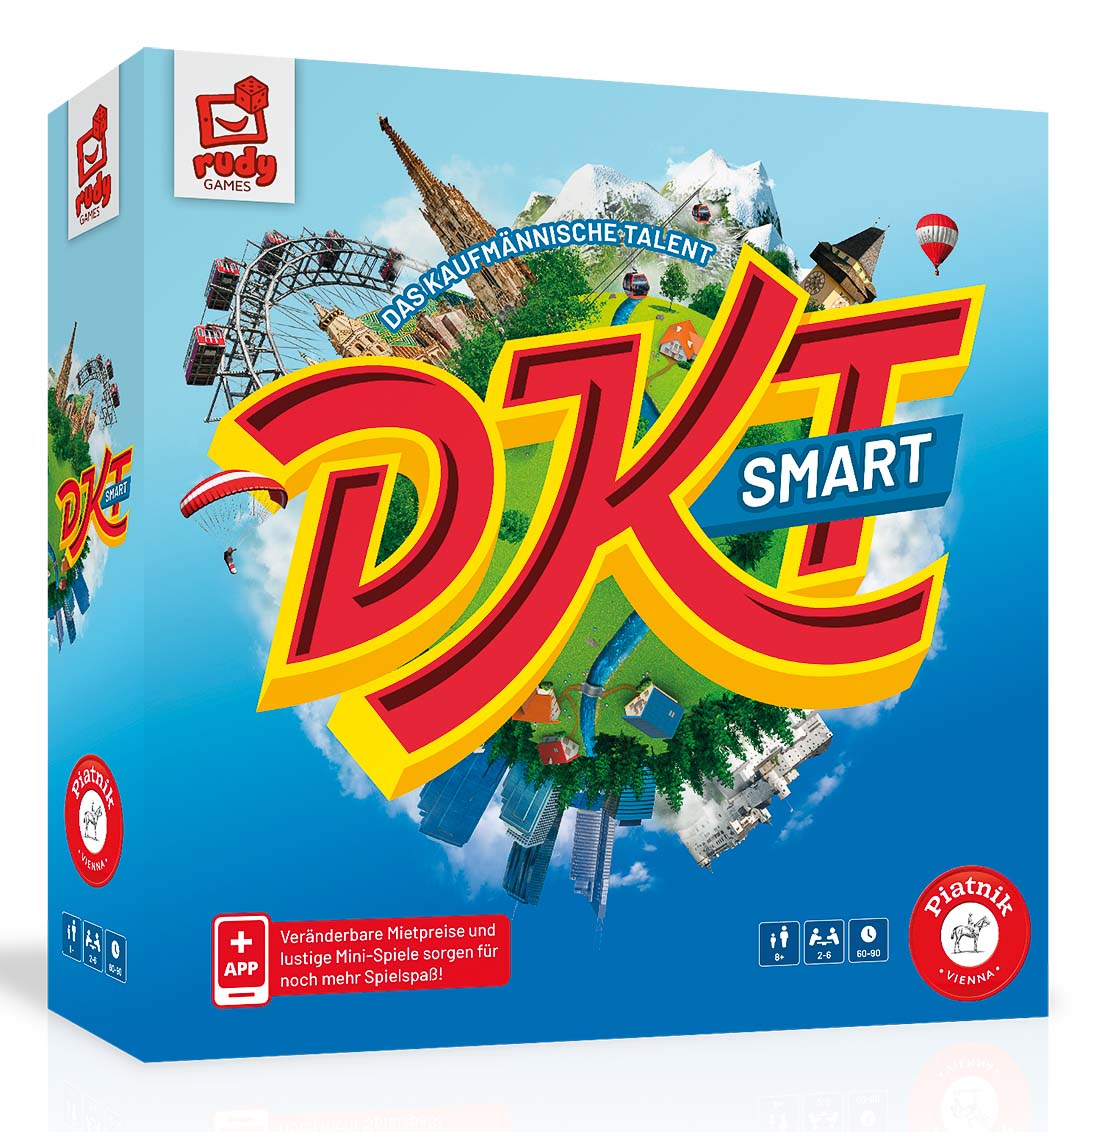 Featured image for “PLATZ 1: DKT Smart (Wiener Spielkartenfabrik/Piatnik)”